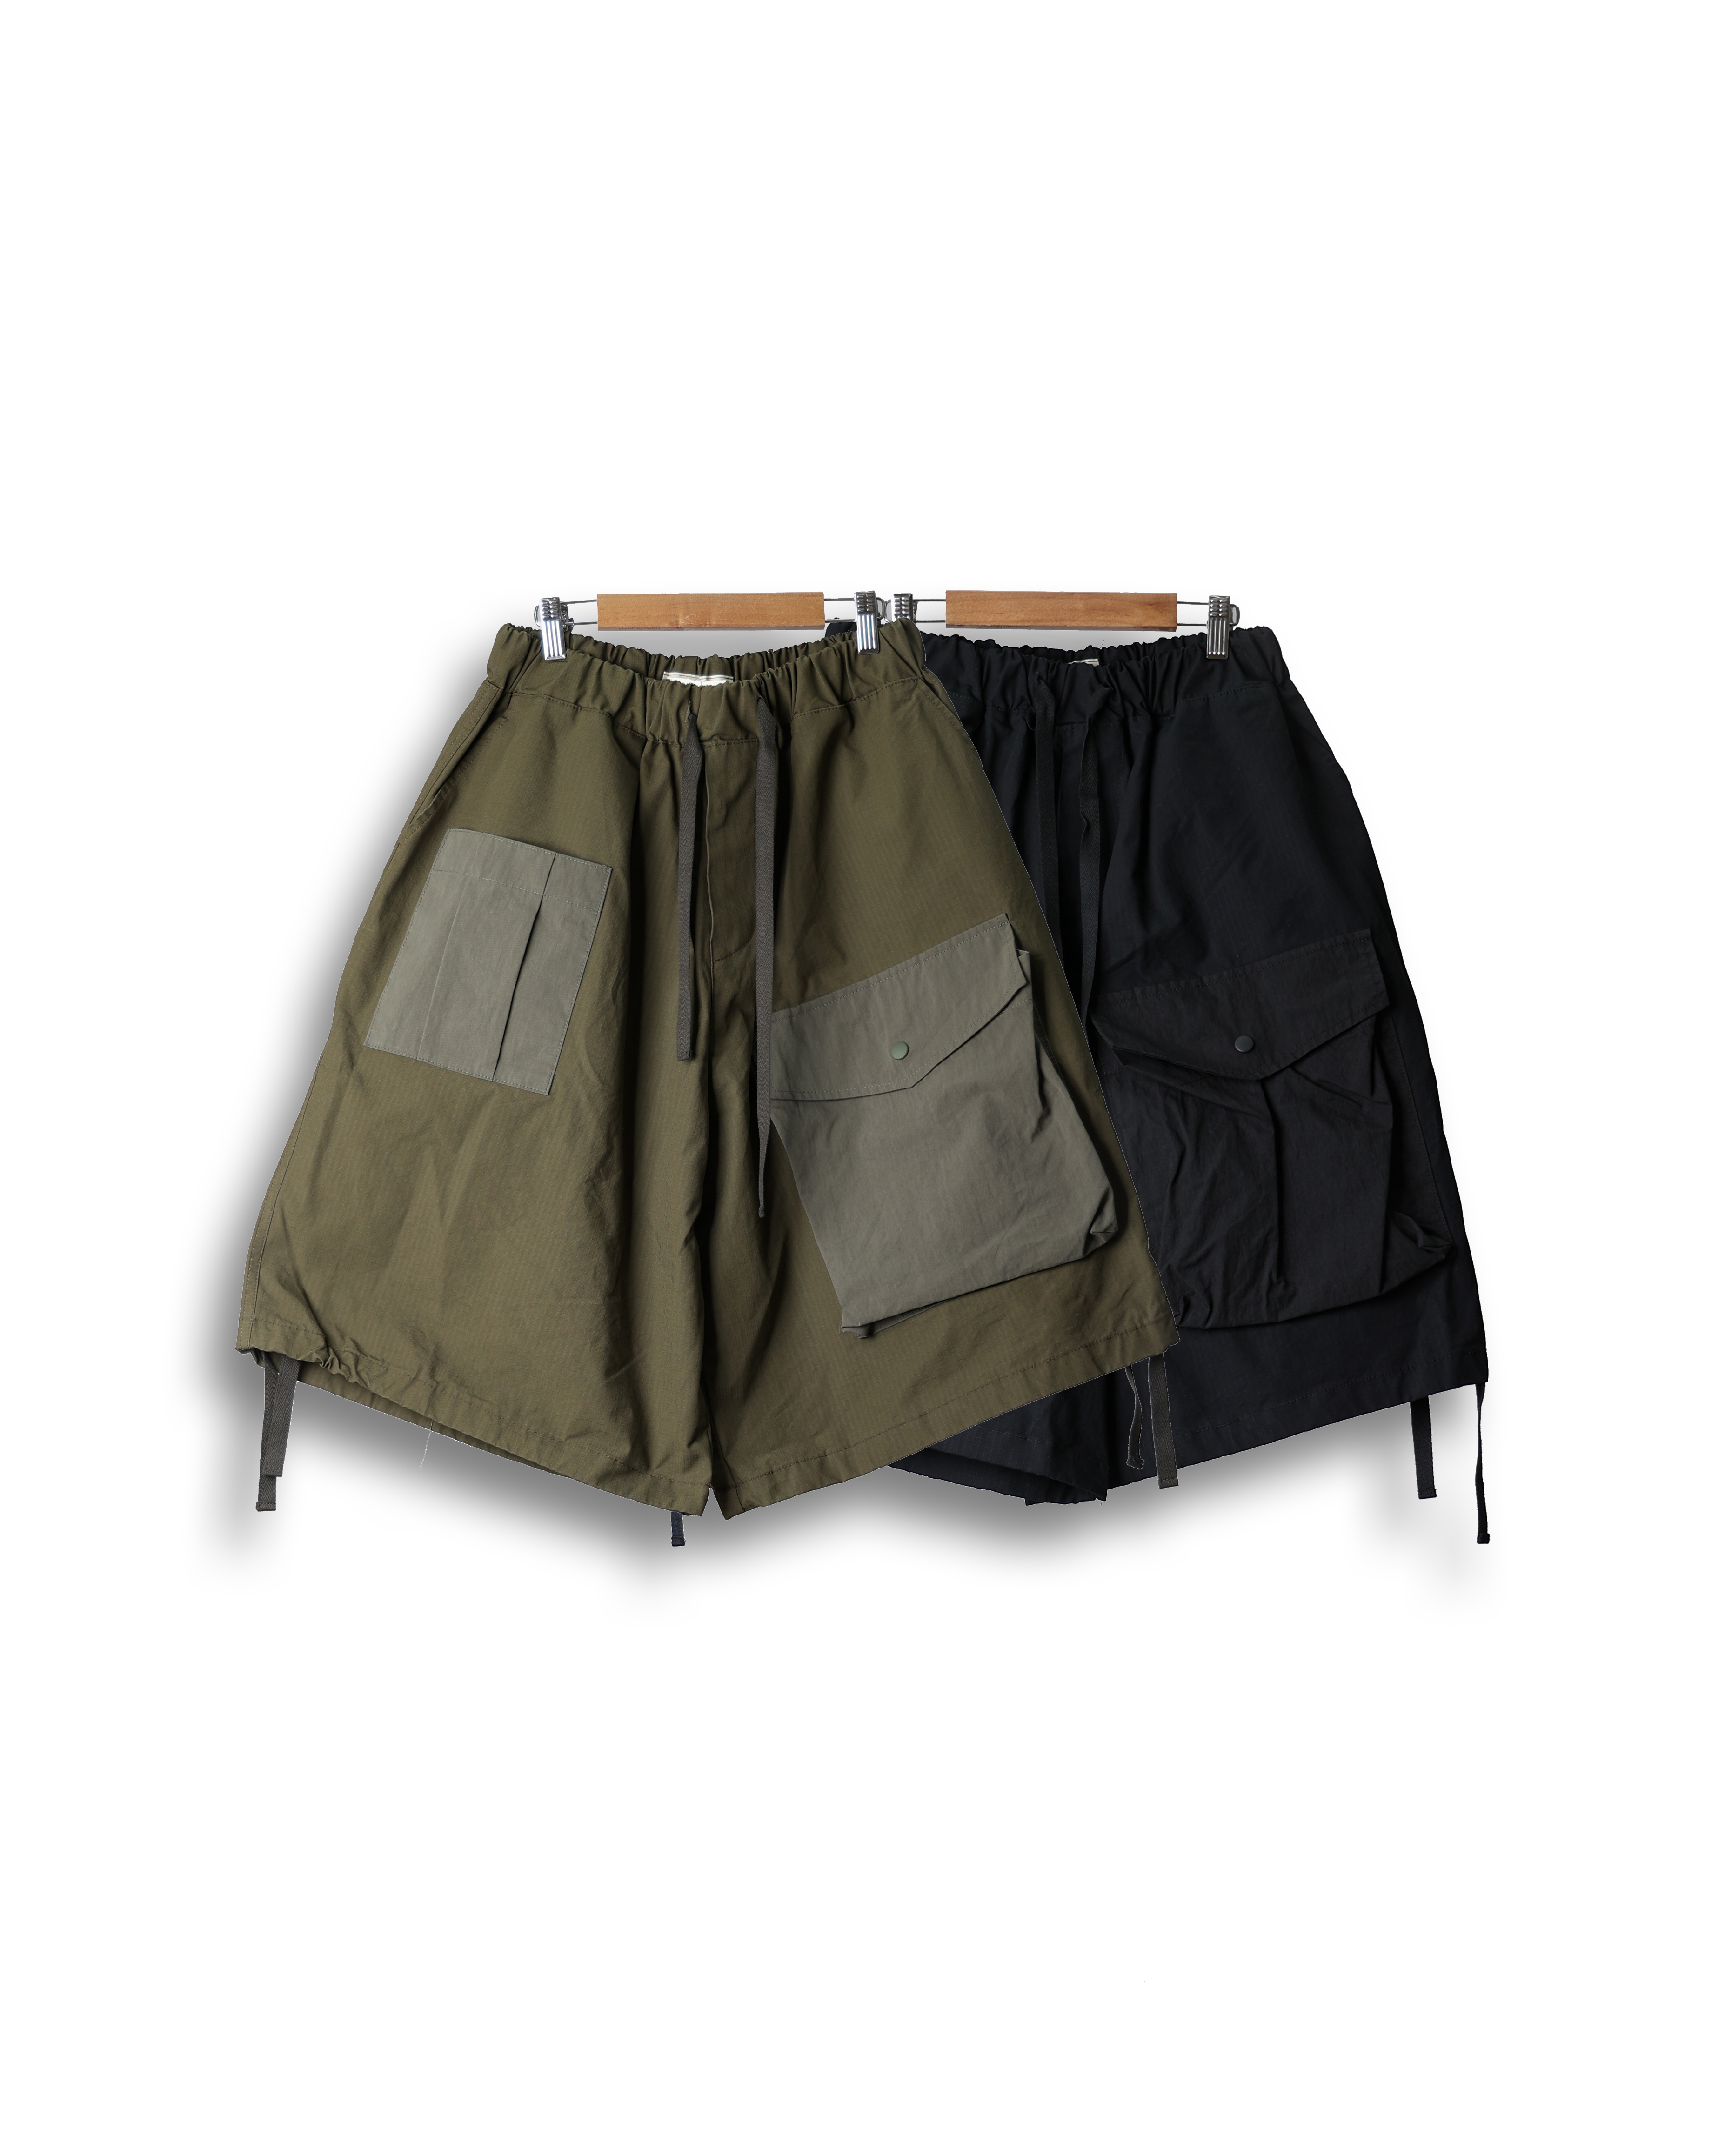 FRAM RIPSTROP Big Pocket Cargo Pants (Black/Khaki) - 4차 리오더 (6/23 배송예정)